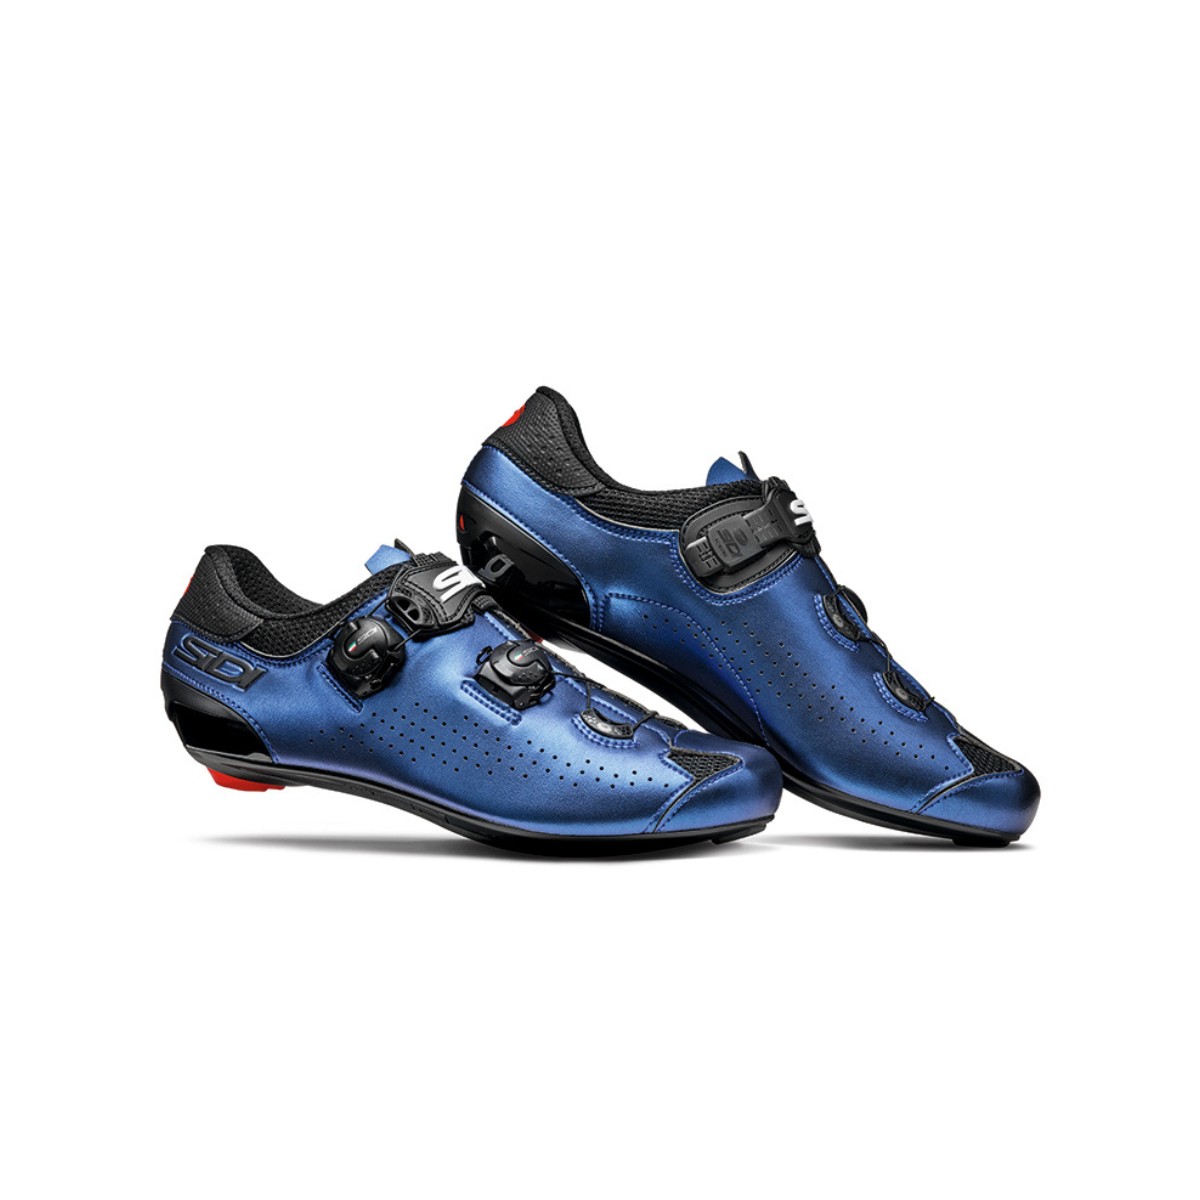 sidi scarpe sixty nere blu - calzature da ciclismo uomo, taglia 47 - eur nero donna